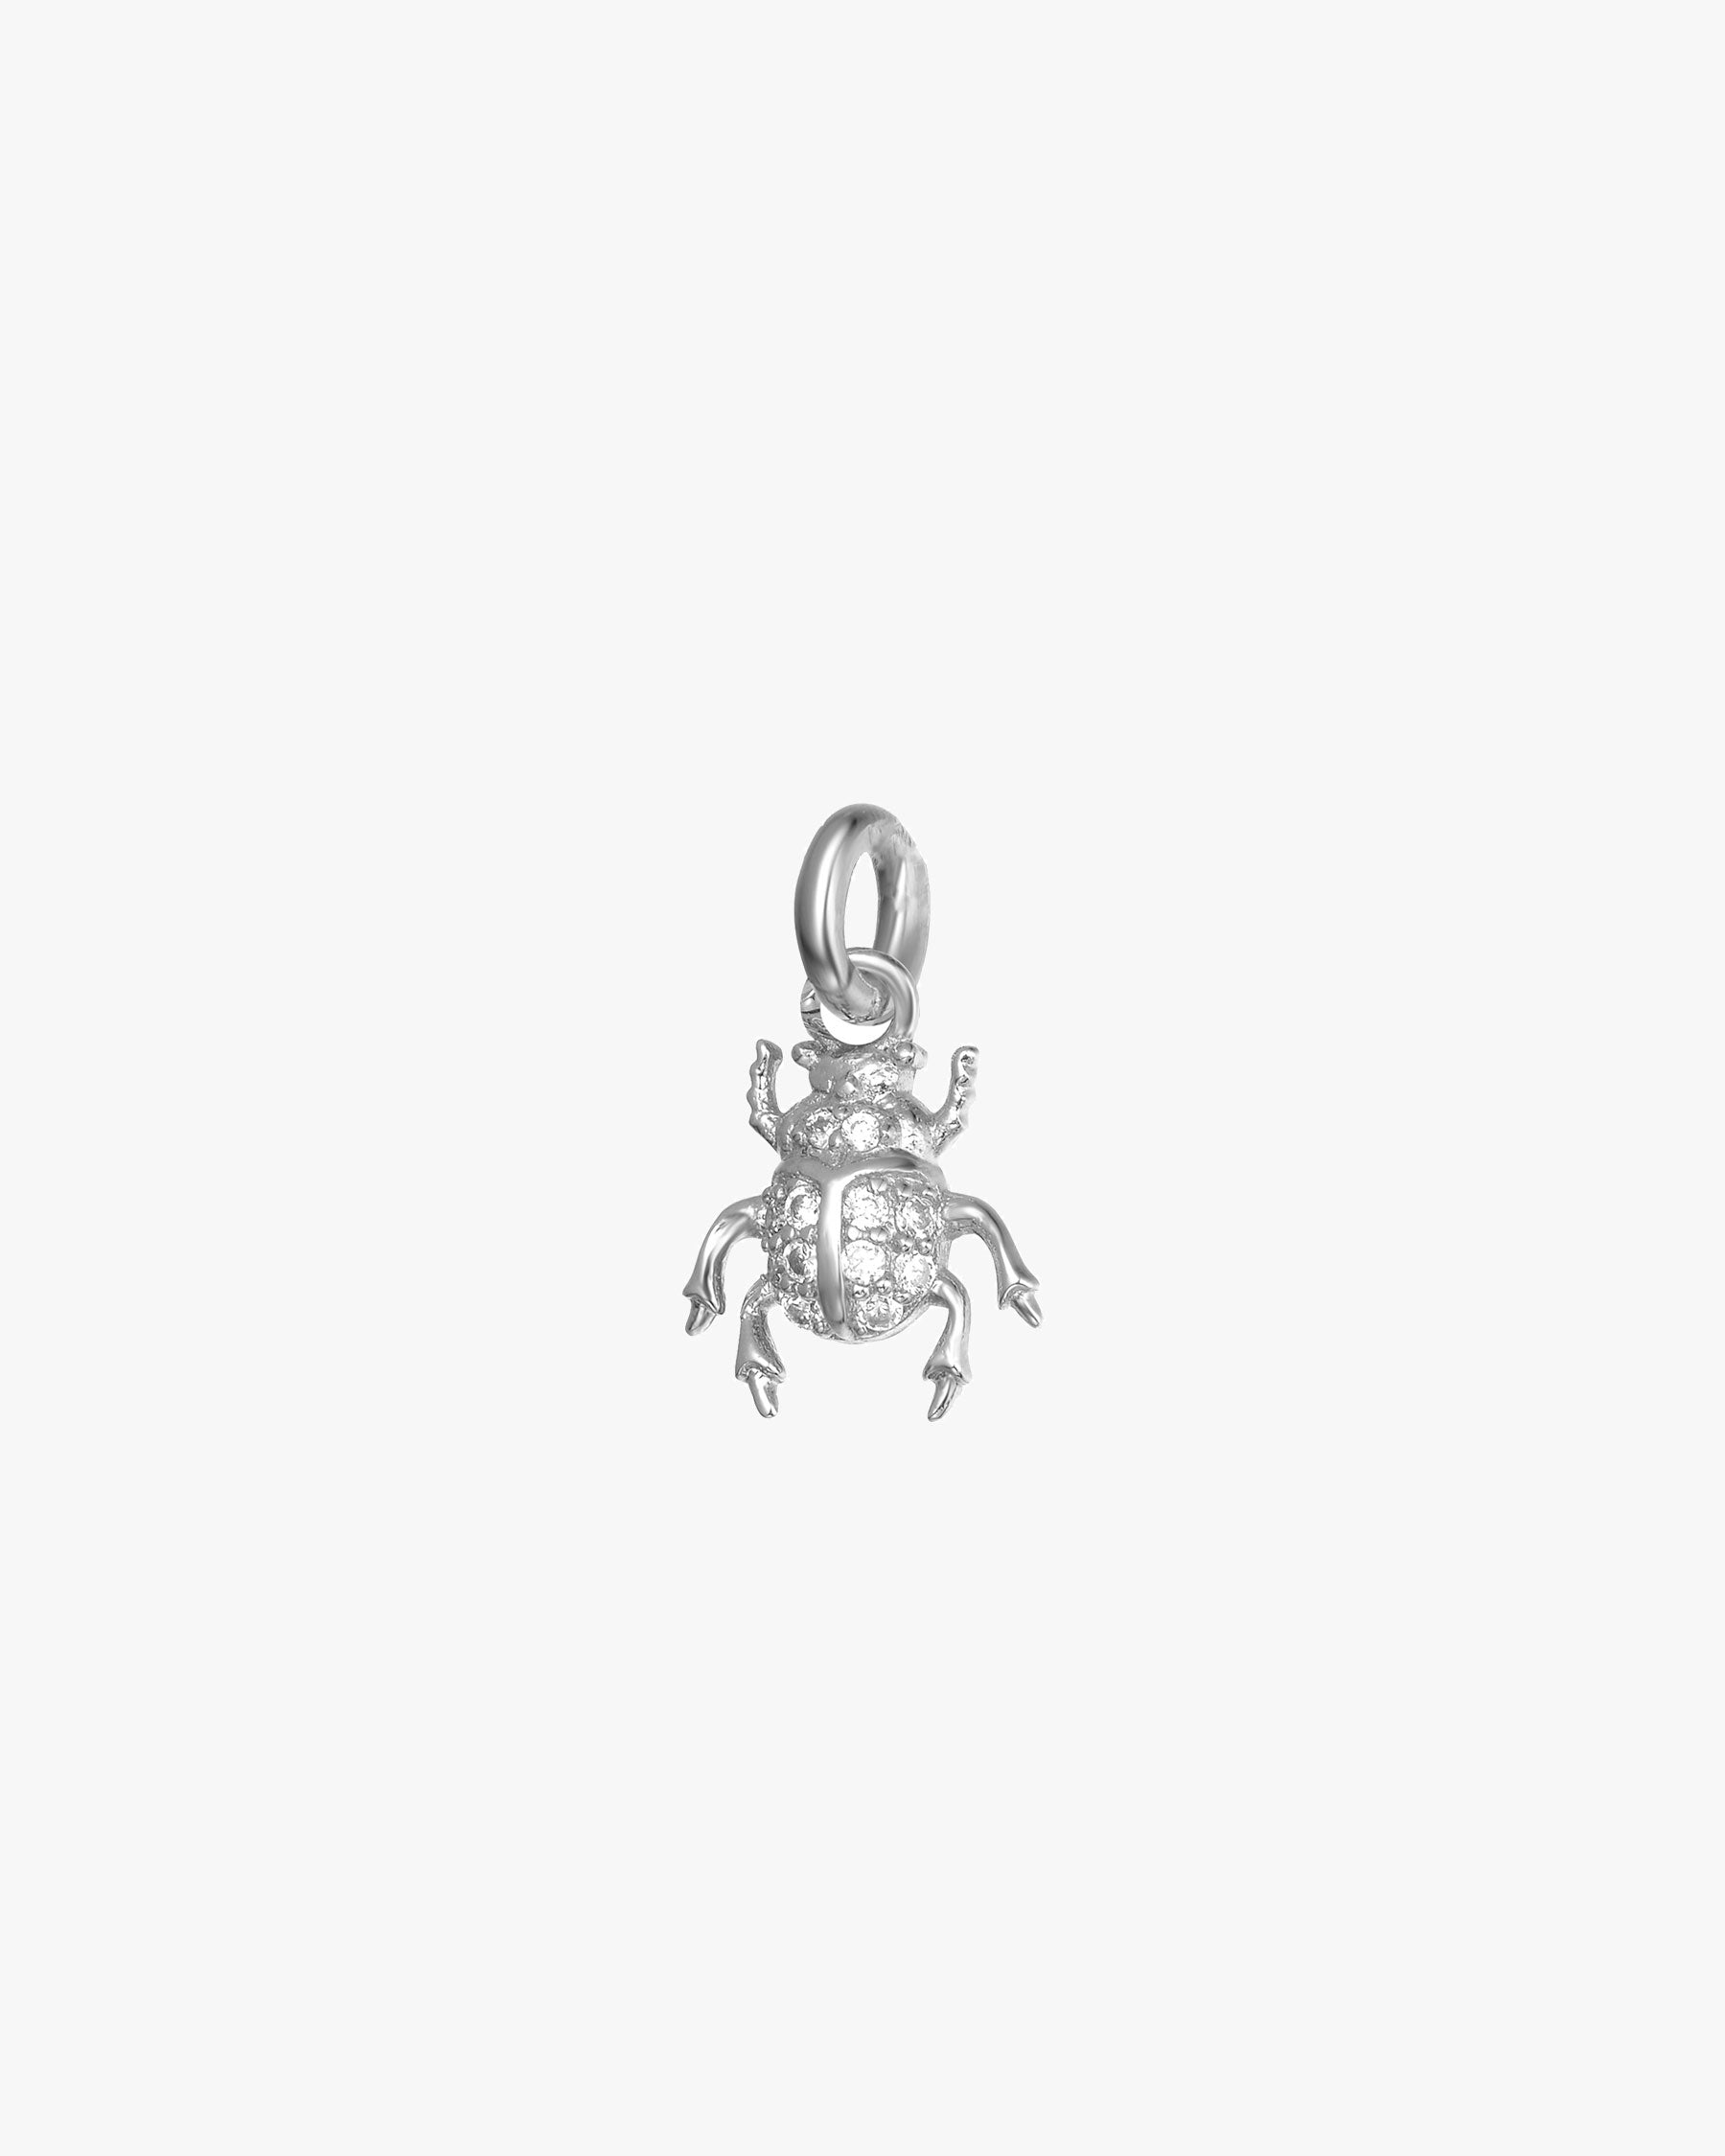 Beetle Charm | The Gray Box